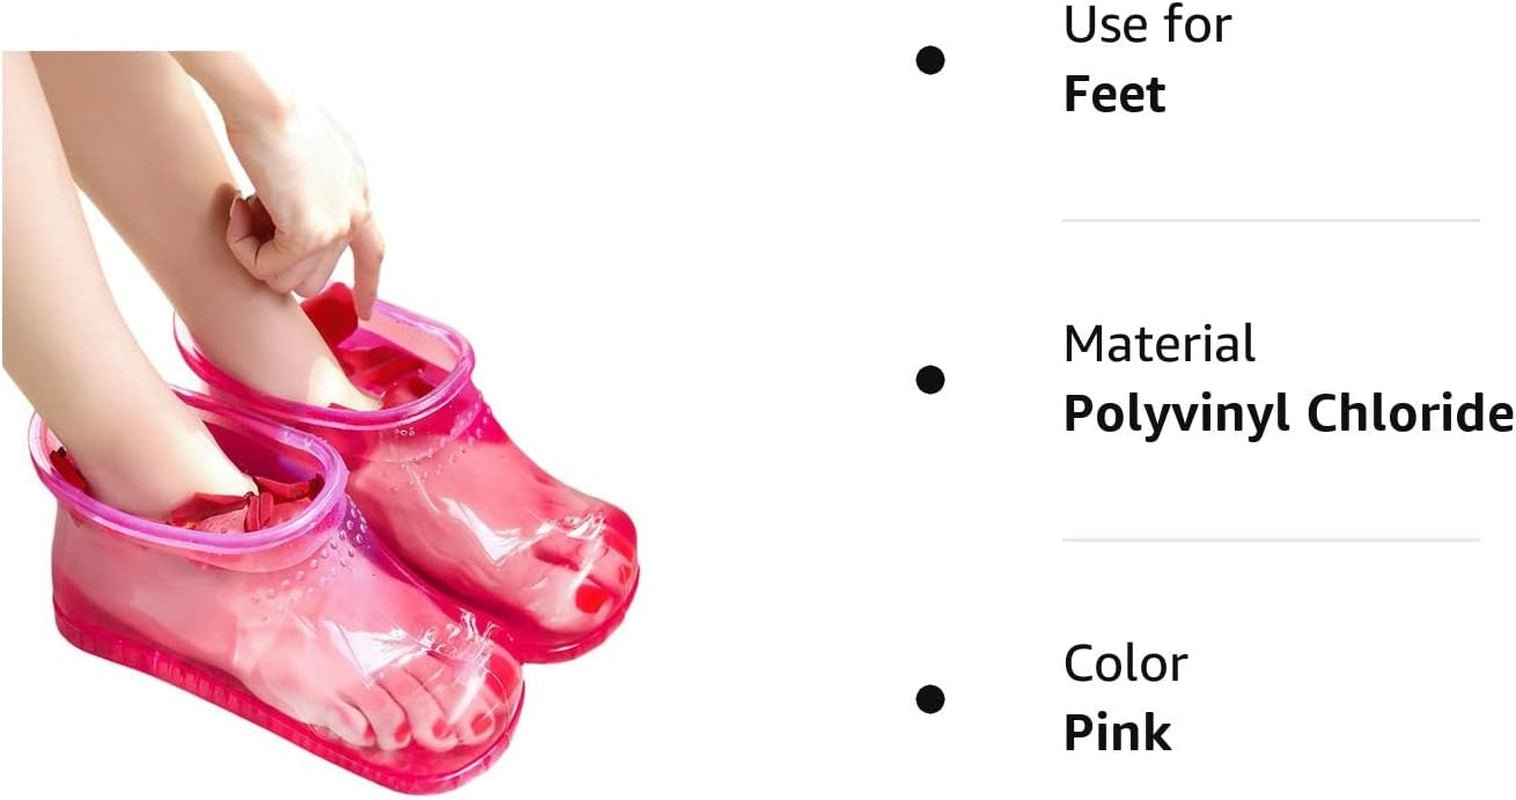 Thermal Massage Foot Bath Shoes,Portable Hook-Type Foot Massage Foot Bath Shoes to Promote Blood Circulation,Containing Bath Powder